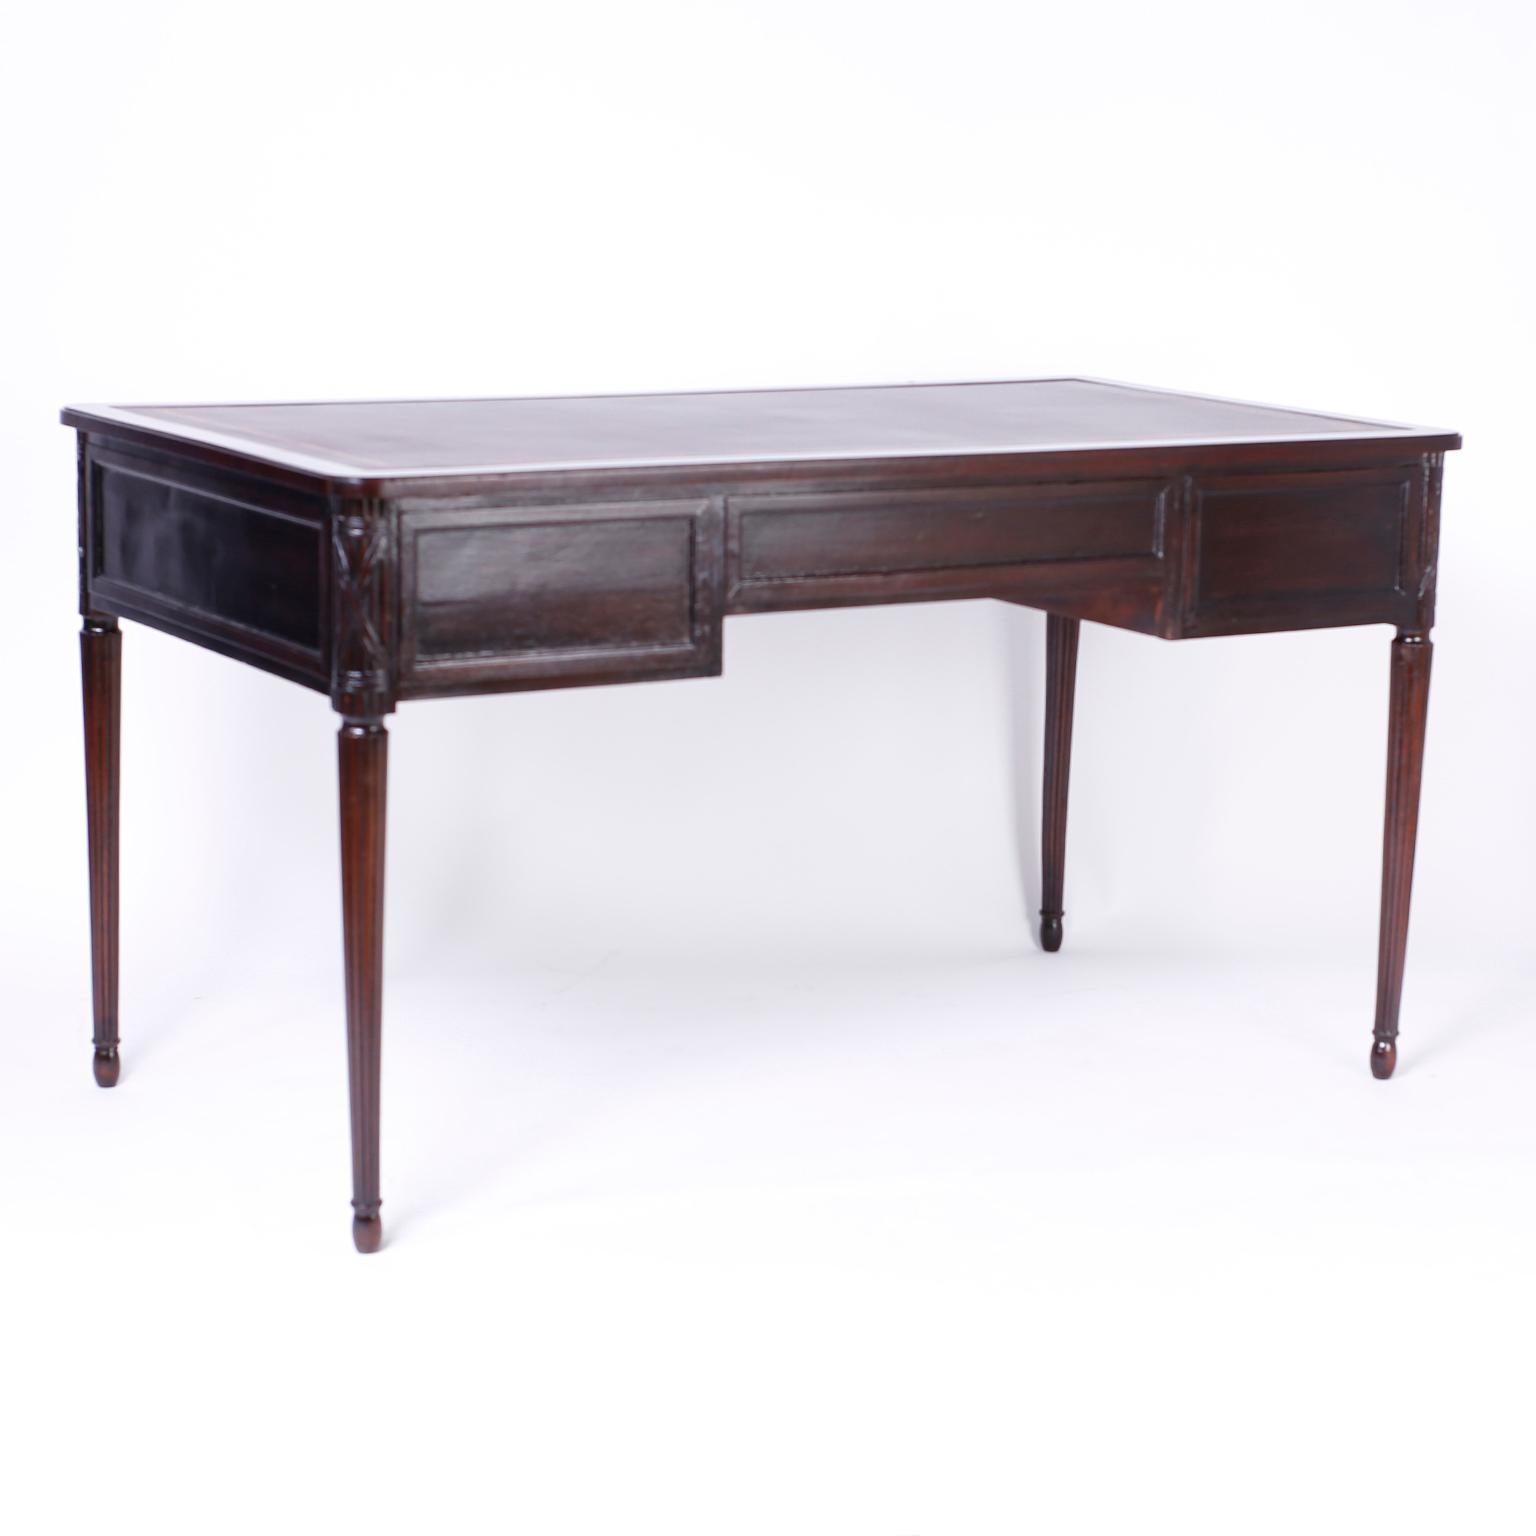 19th Century French Mahogany Leather Top Writing Desk or Bureau Palt